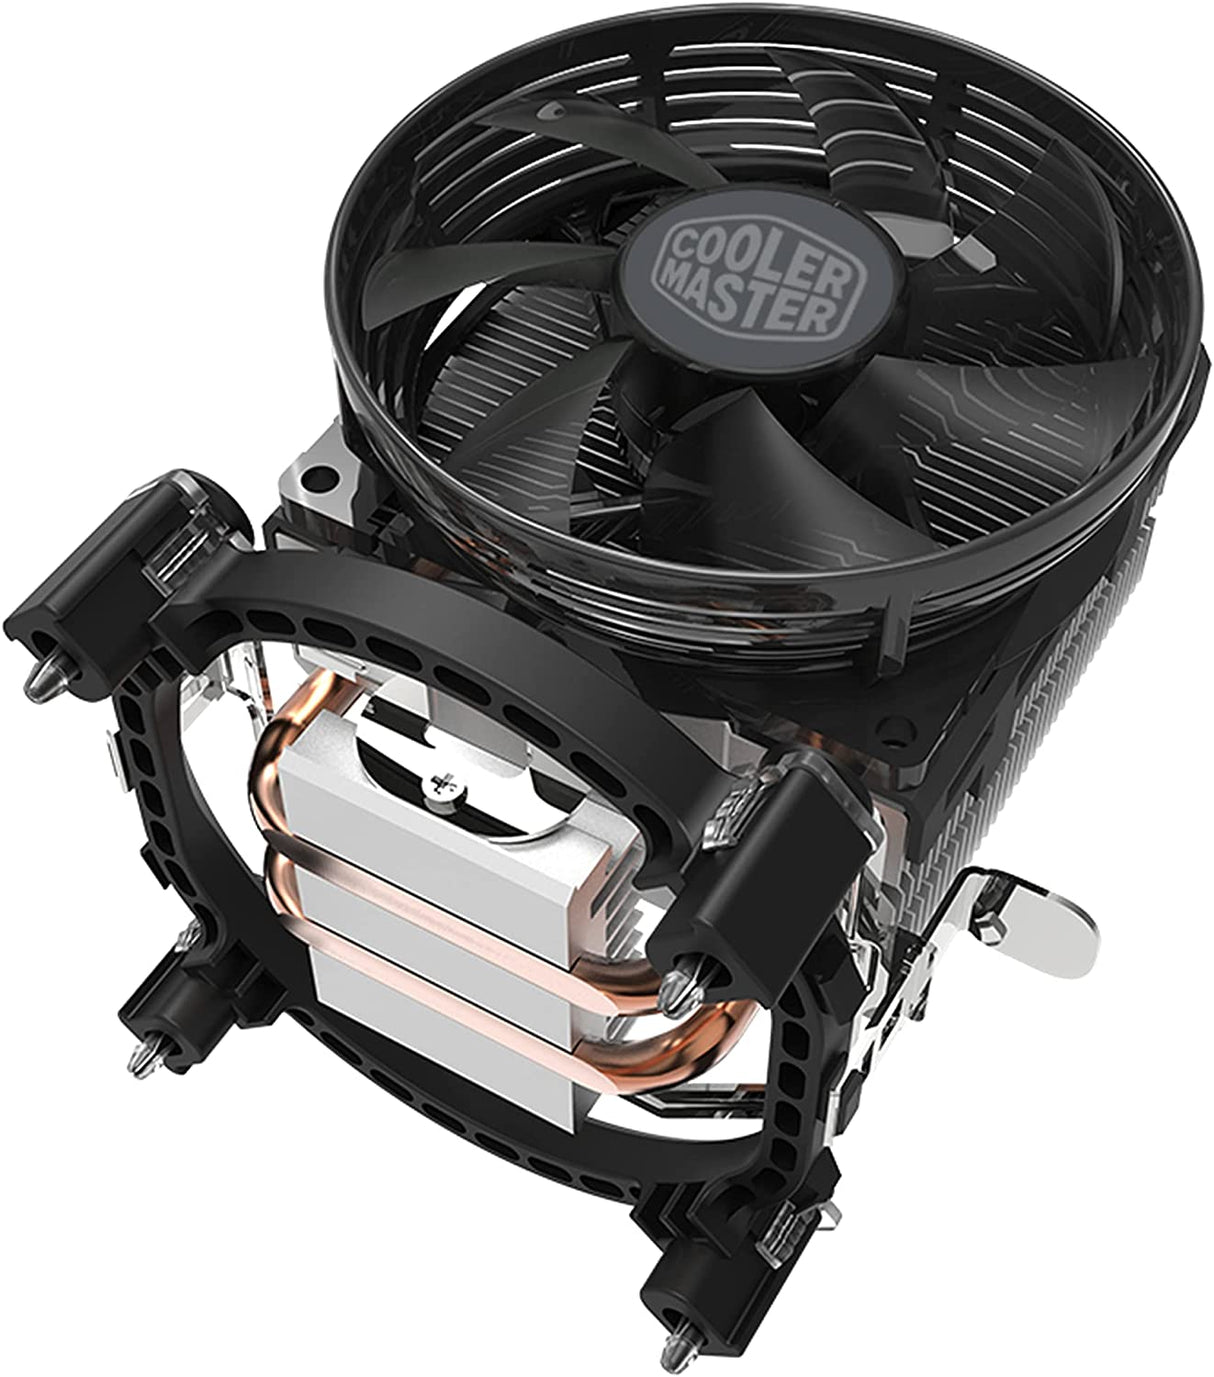 Cooler Master Hyper T20 Compact CPU Air Cooler, 95mm Fan, 2 Copper Direct Contact Heat Pipe for AMD Ryzen/Intel LGA1200/1151 Hyper T20 2 Heat Pipes